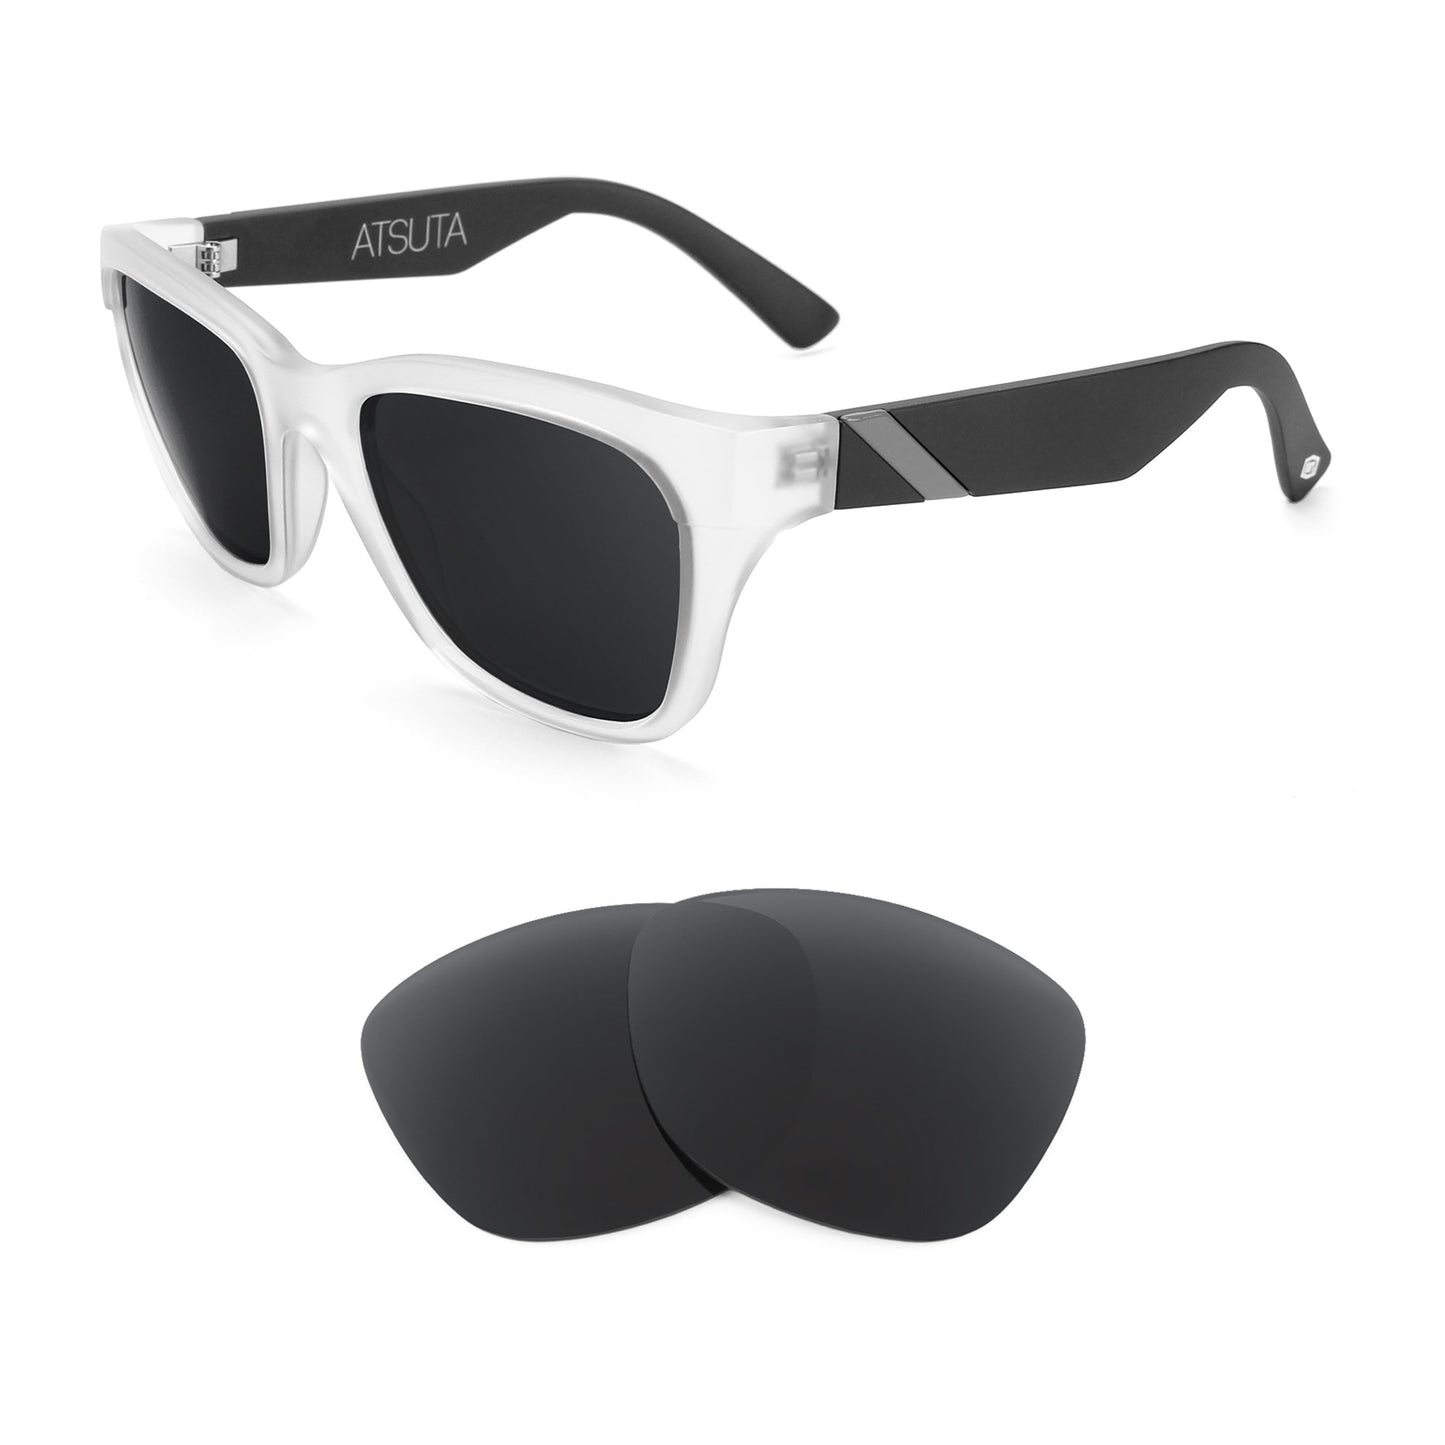 100% Atsuta sunglasses with replacement lenses